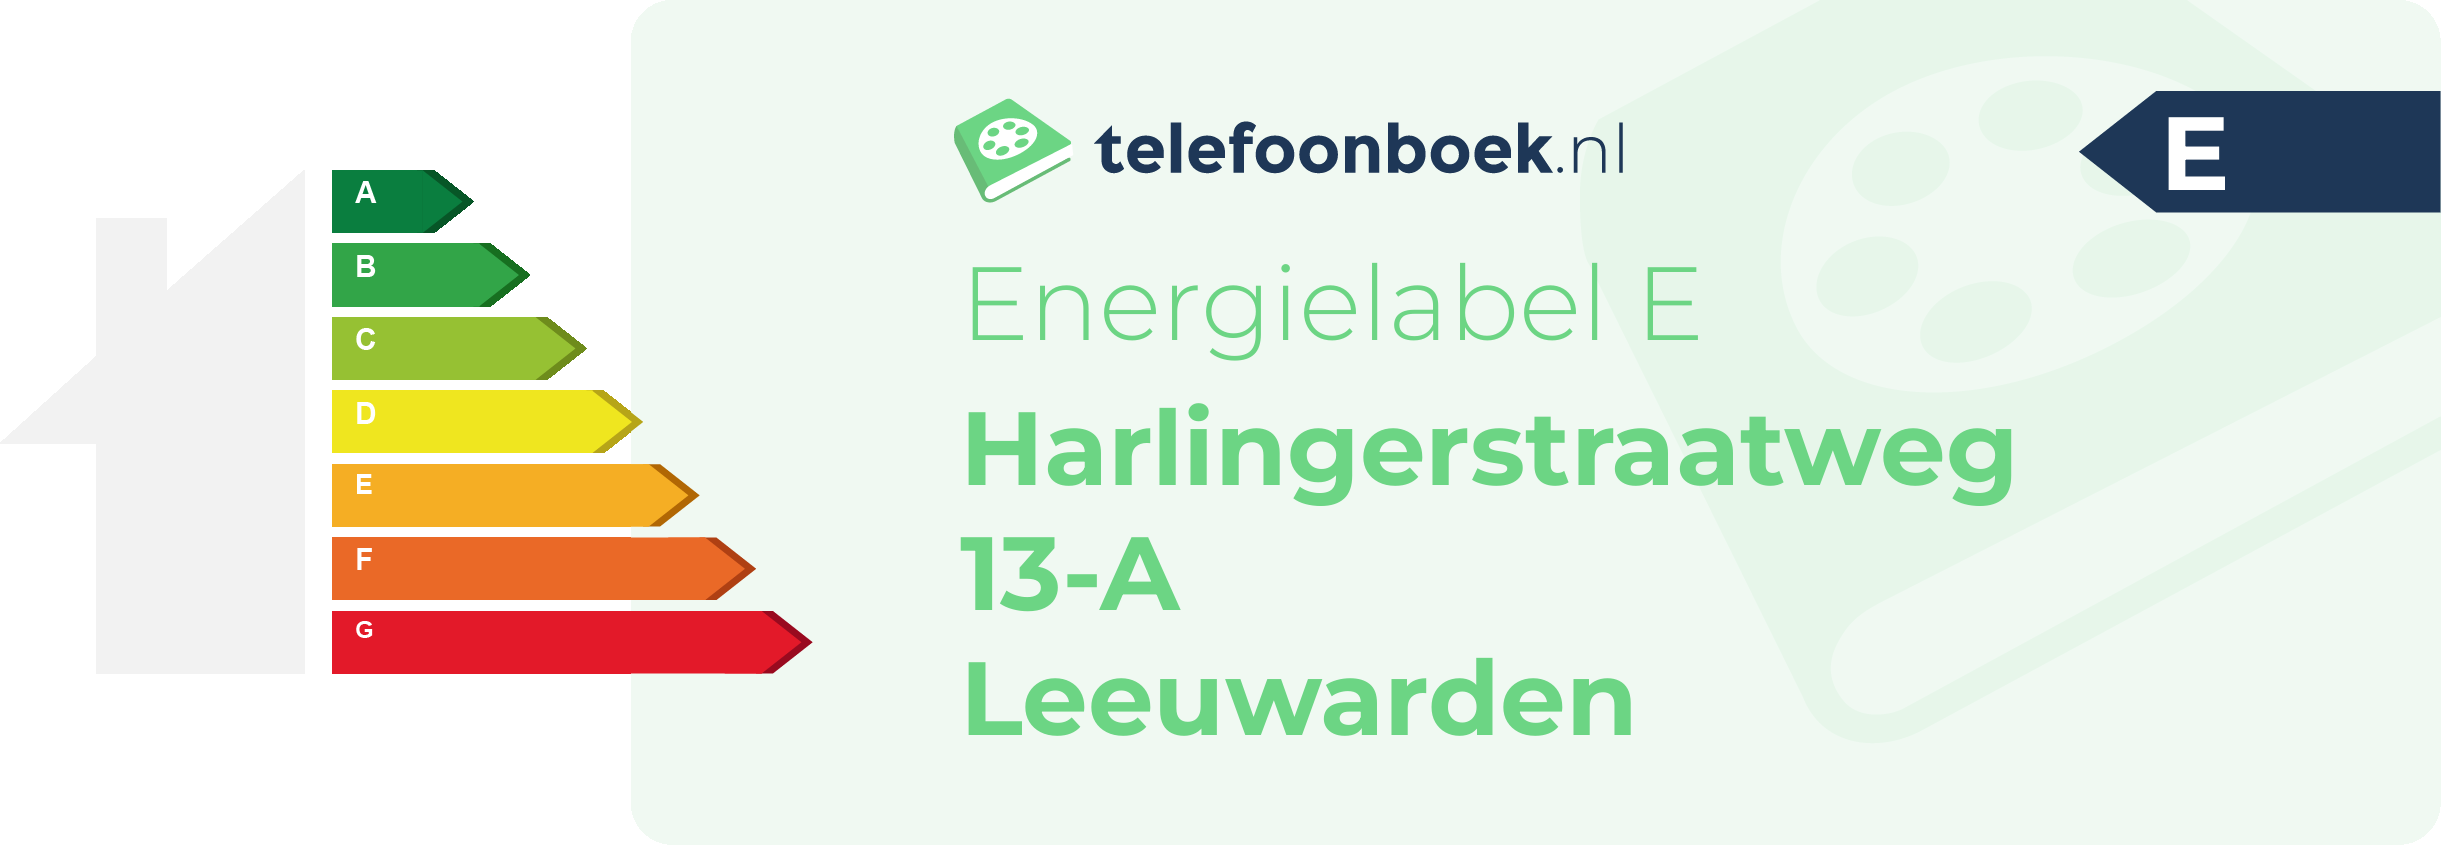 Energielabel Harlingerstraatweg 13-A Leeuwarden